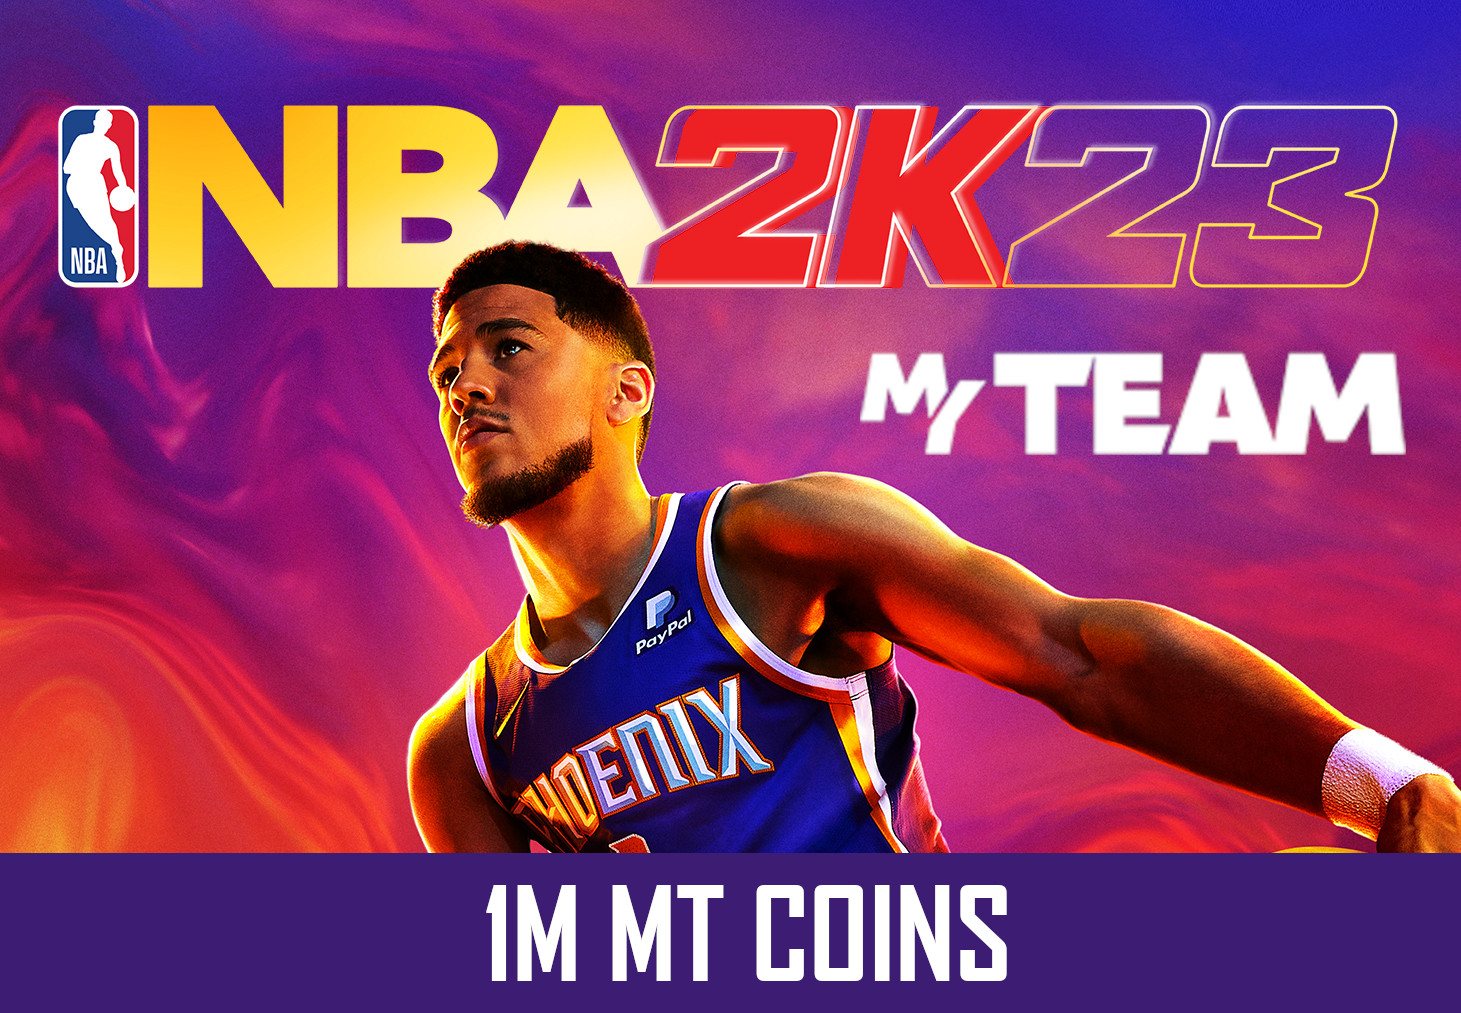 NBA 2K23 - 1M MT Coins - GLOBAL PS4/PS5